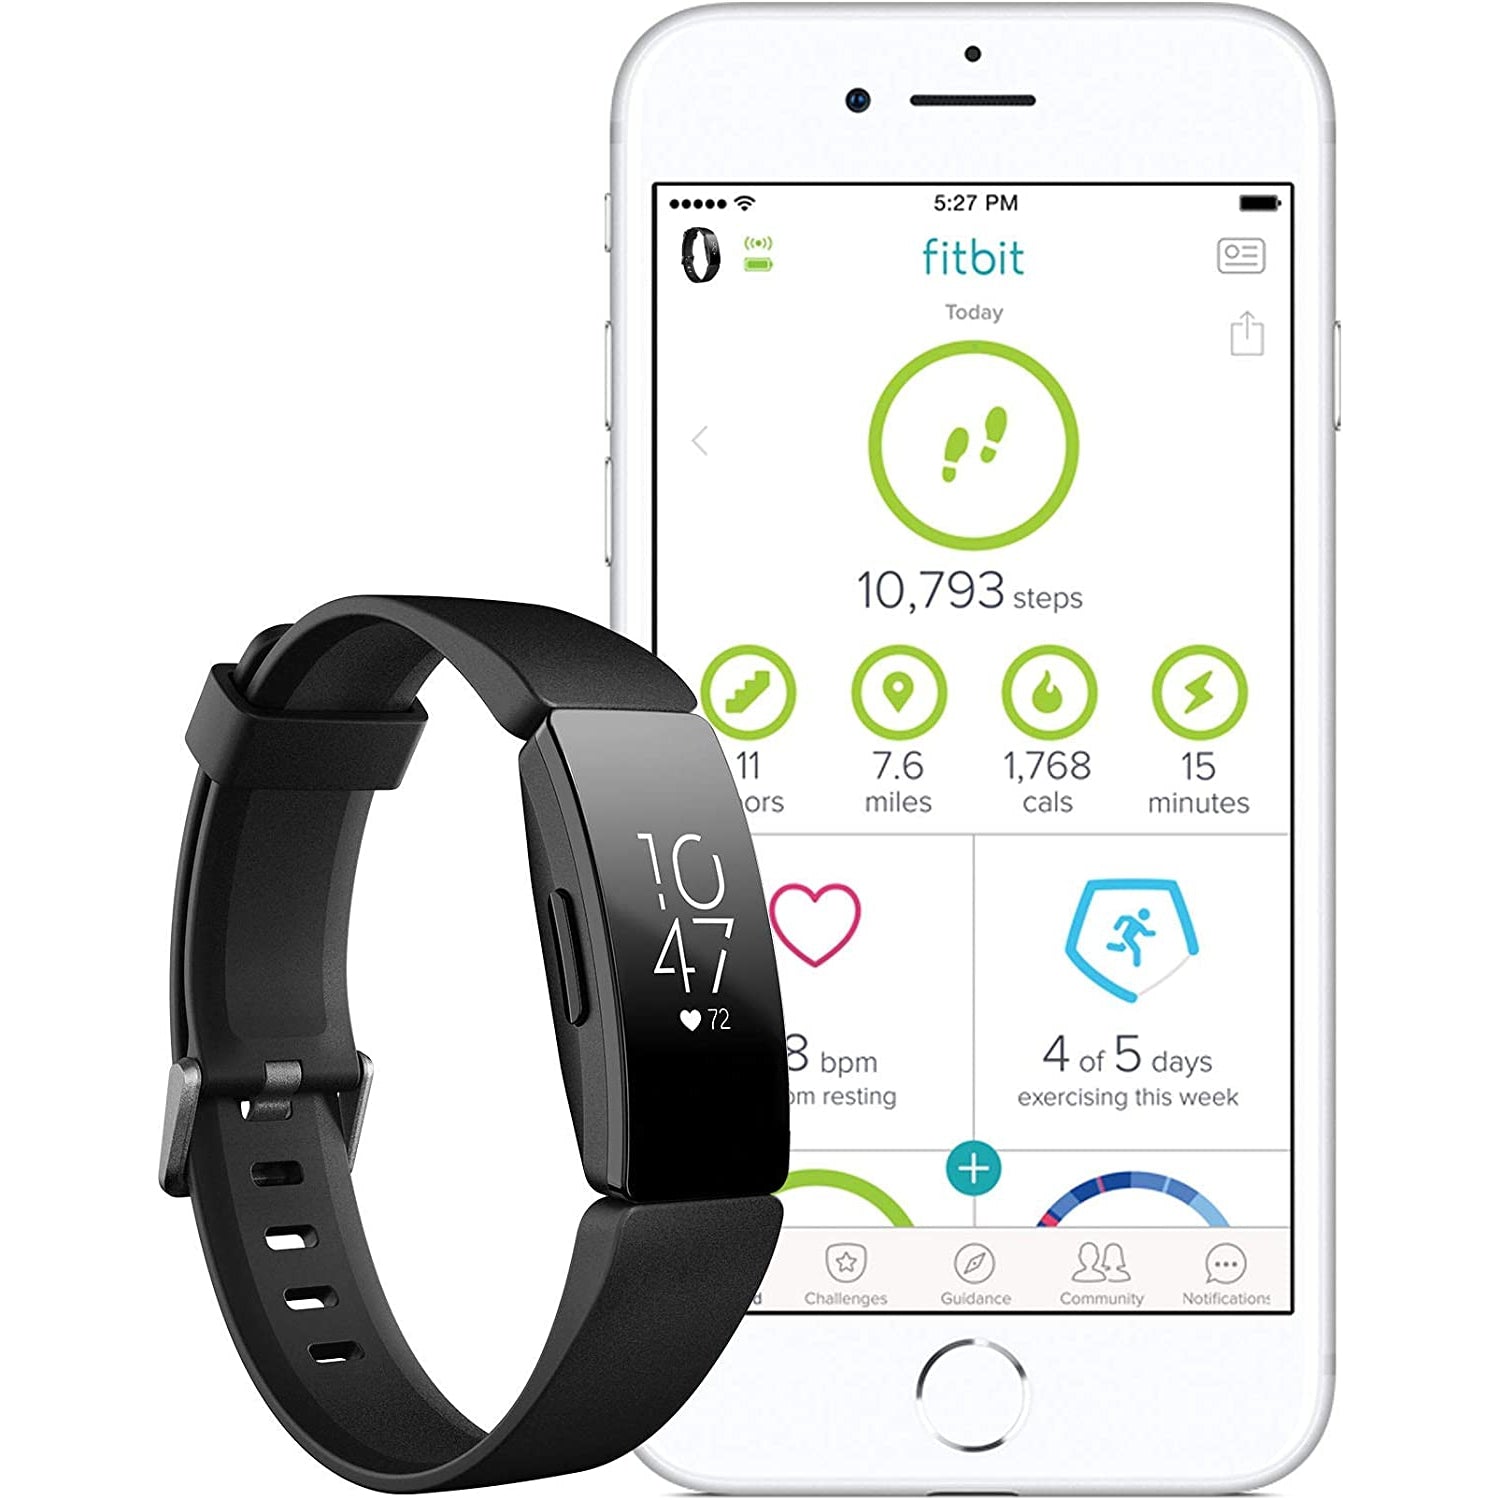 Fitbit Inspire HR Health & Fitness Tracker - Black - Refurbished Good